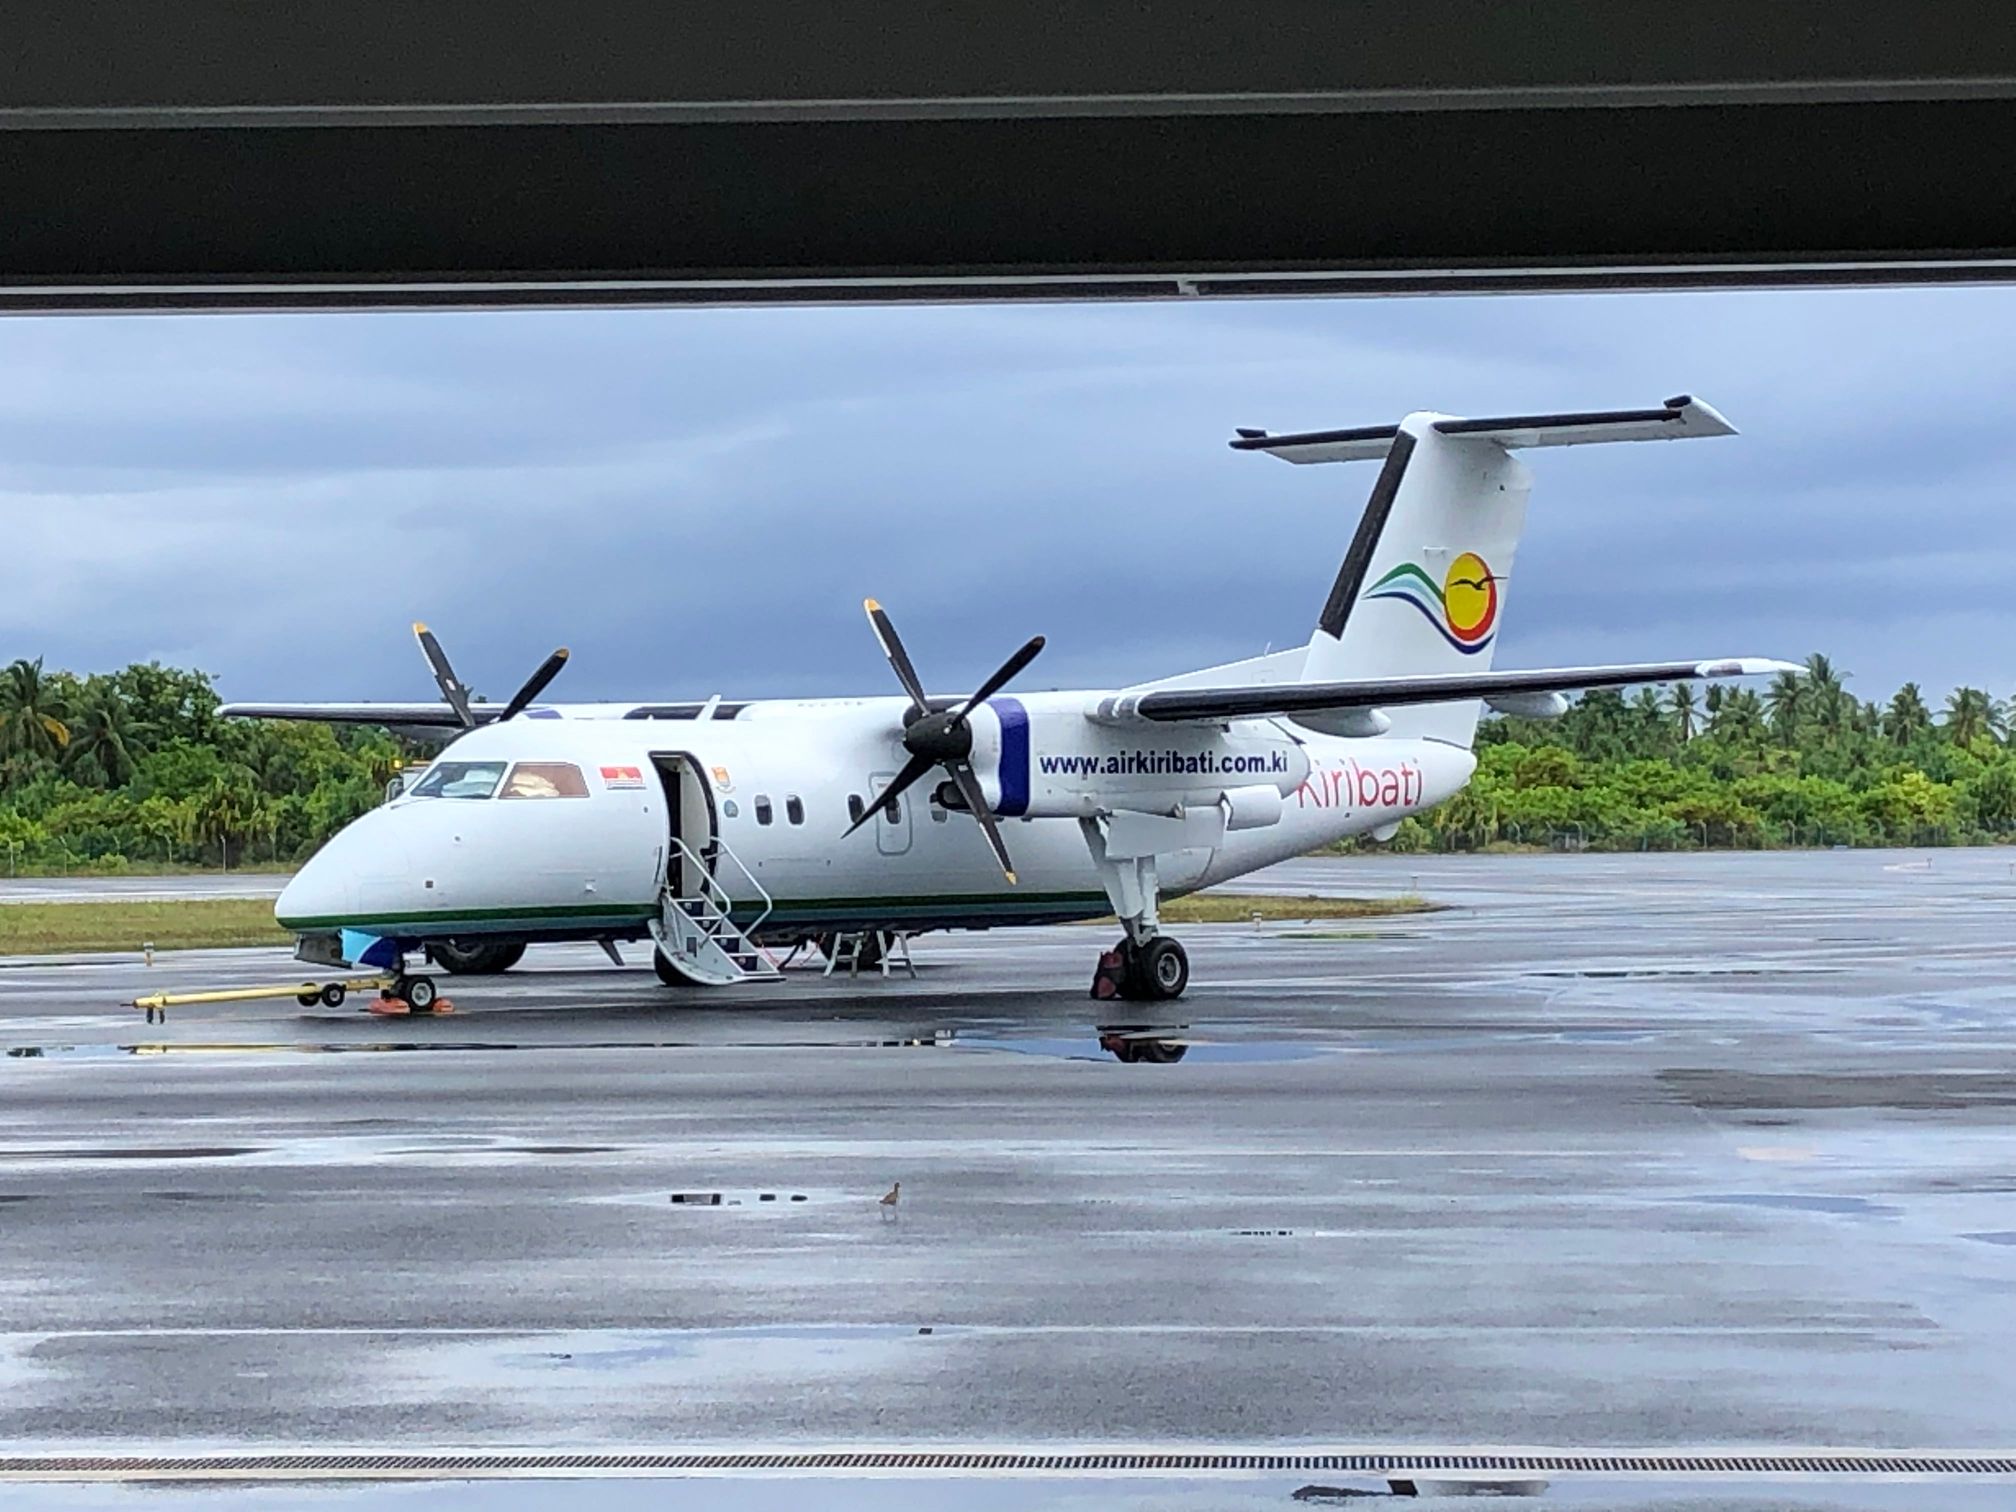 Air Kiribati aircraft, useful to travel around the Pacific Islands